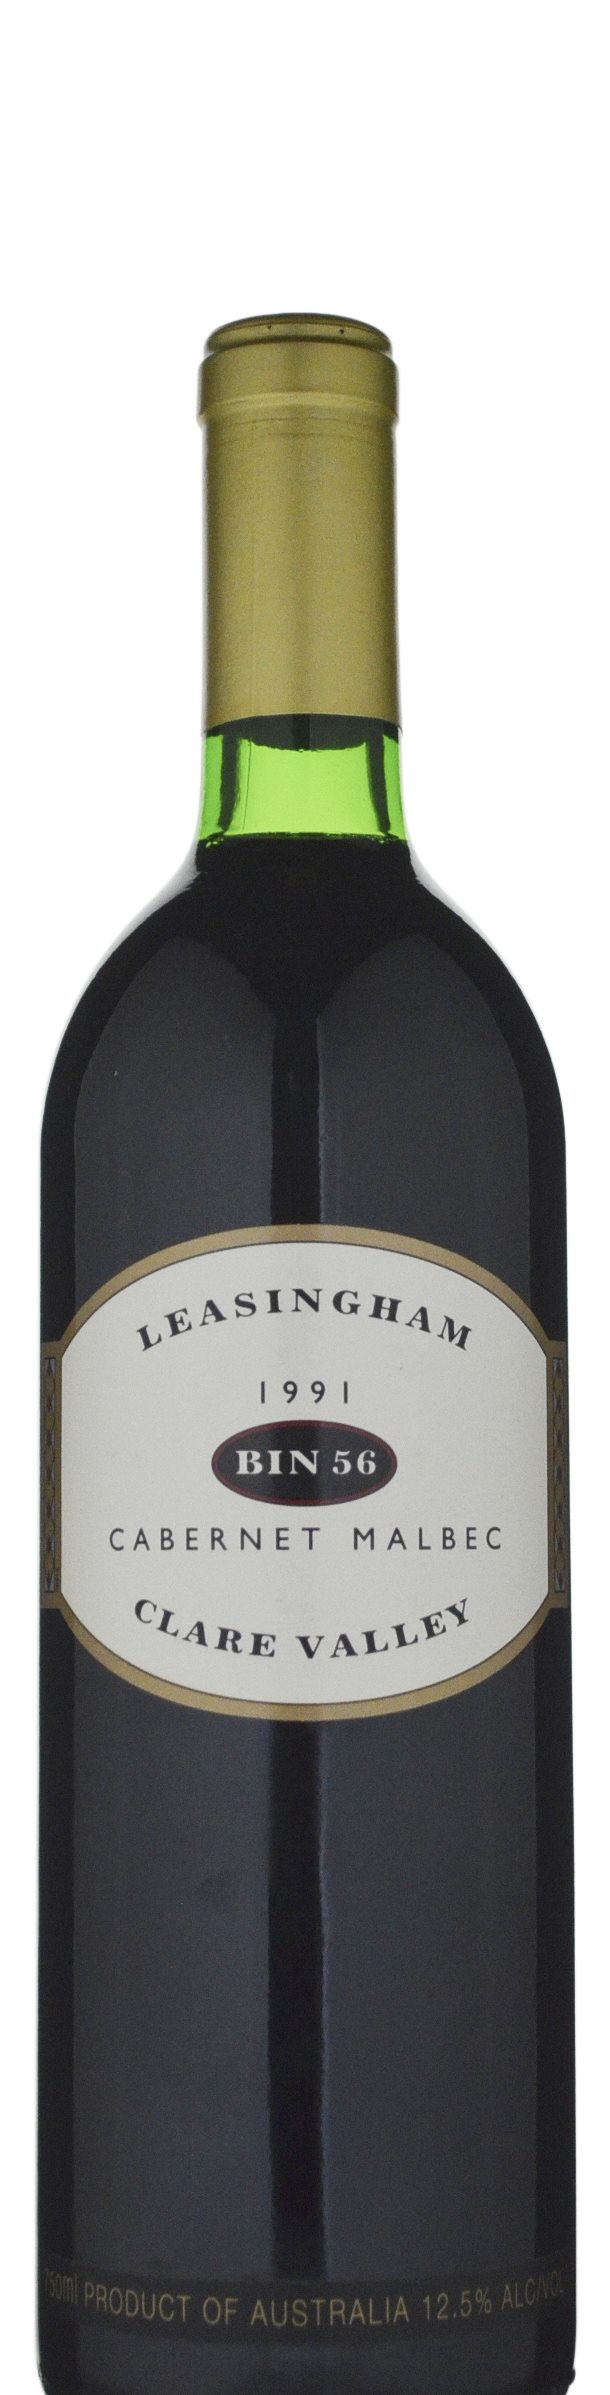 Leasingham Bin 56 Cabernet Malbec 1991